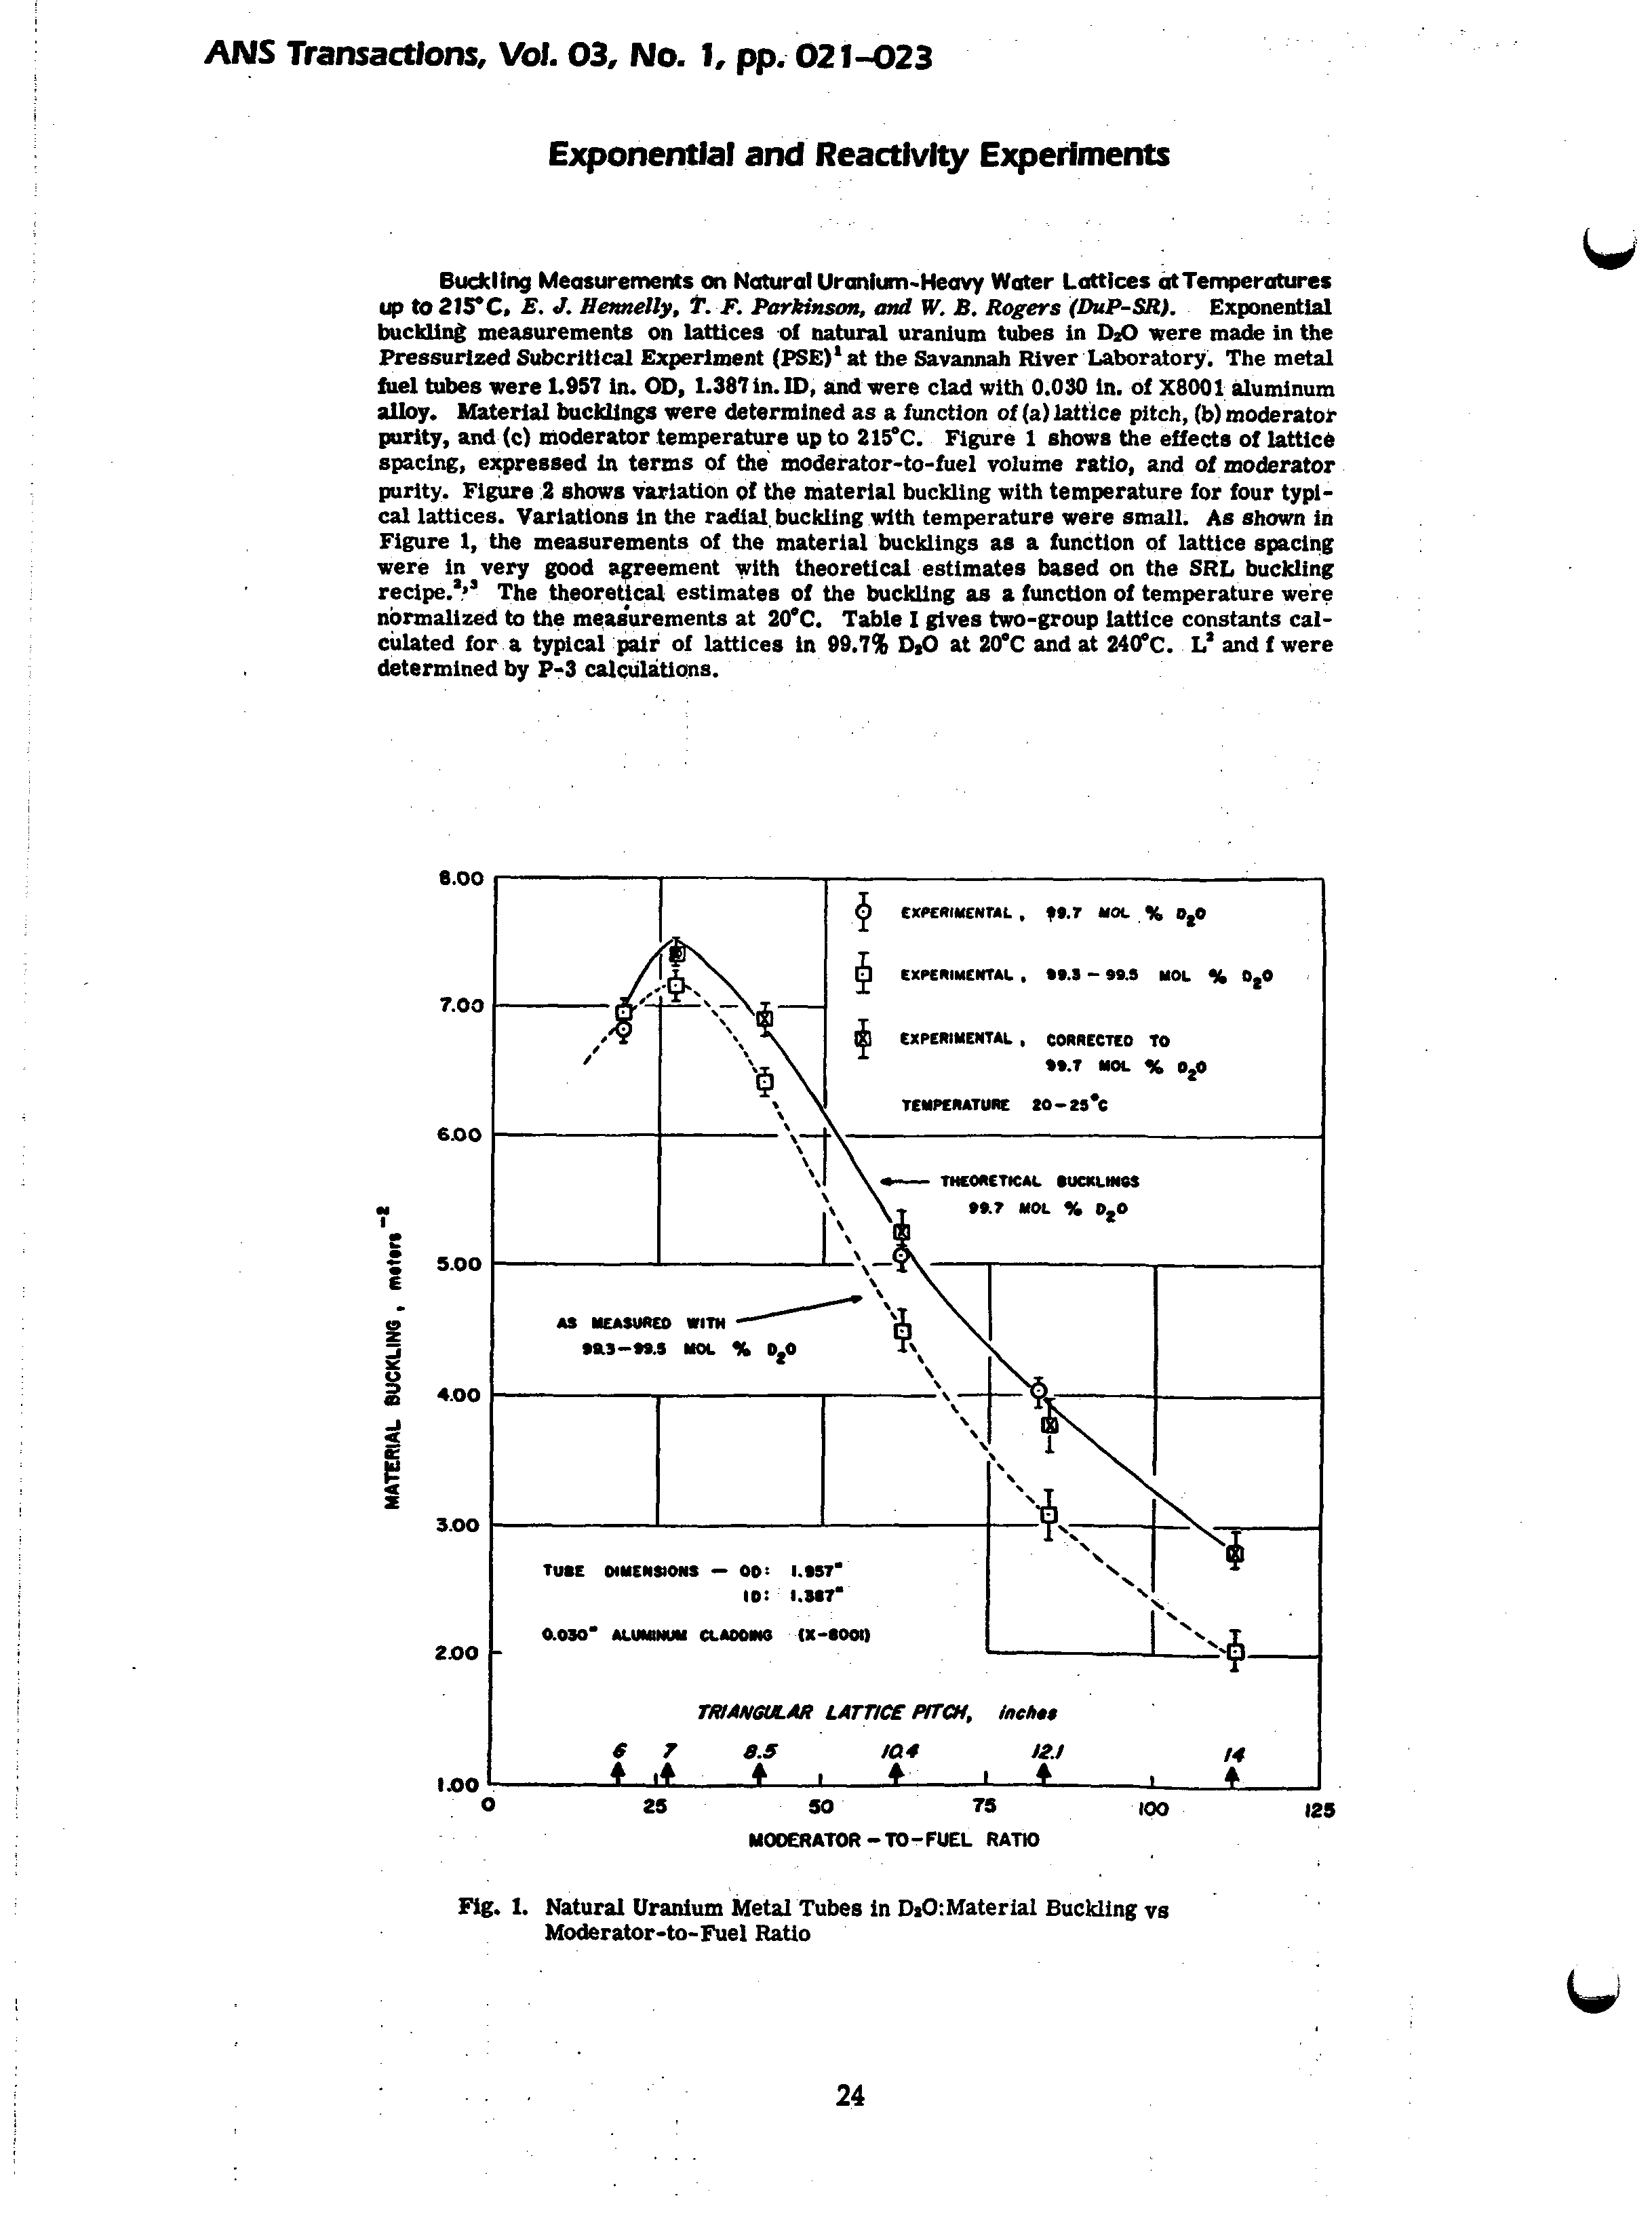 Fig. 1. Natural Uranium Metal Tubes in D>0 Material Buckling vs Moderator-to-Fuel Ratio...